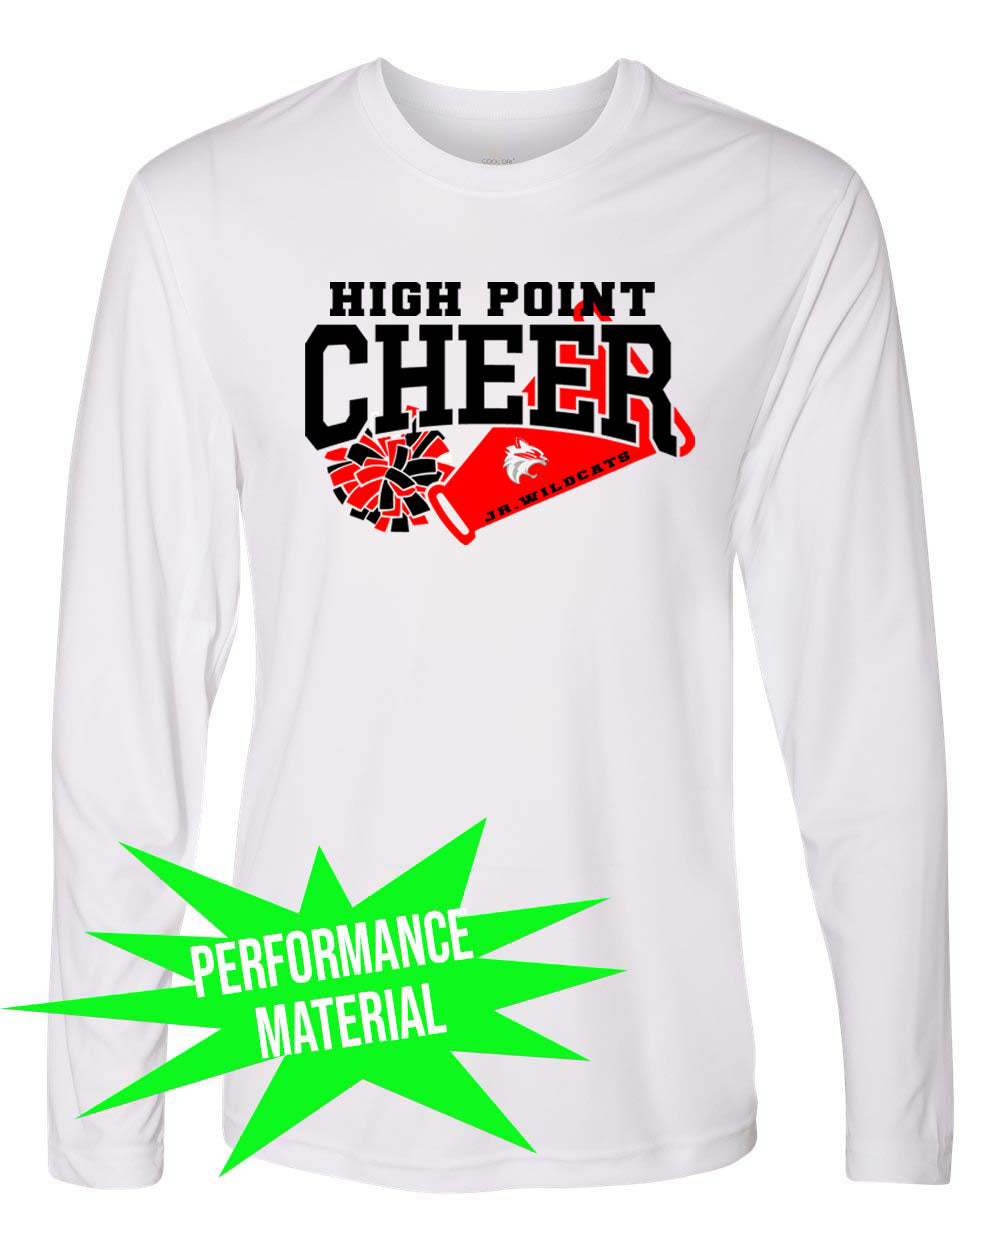 High Point cheer Performance Material Design 1 Long Sleeve Shirt